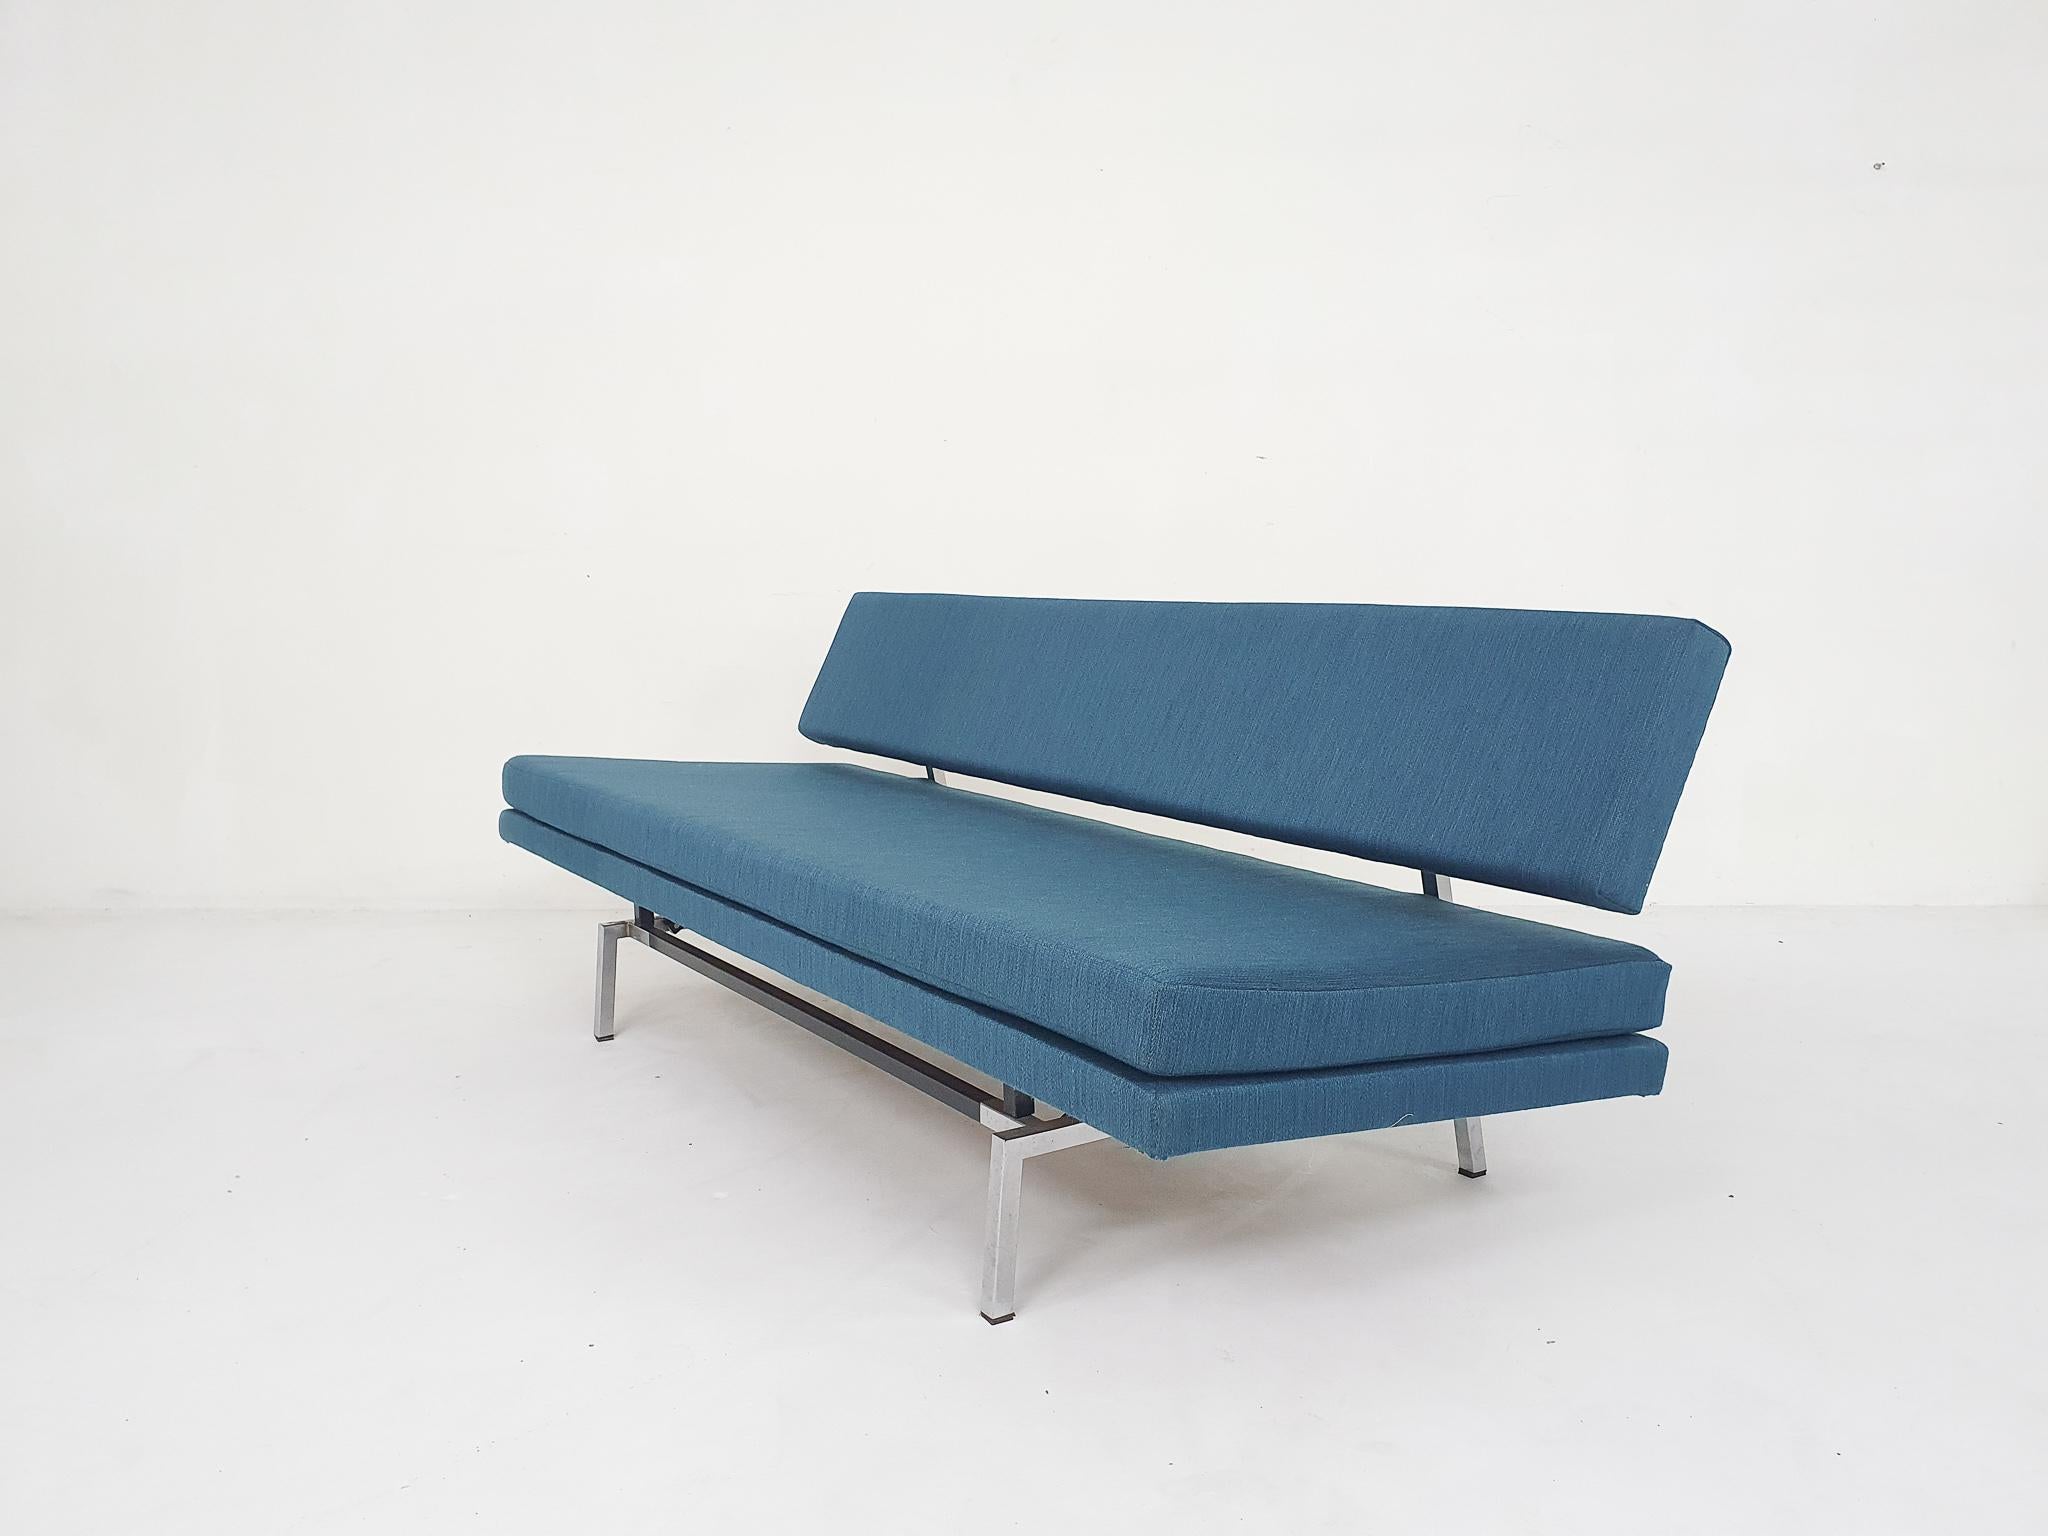 Dutch BR 02 sleeper sofa by Martin Visser for ’t Spectrum, The Netherlands, 1958